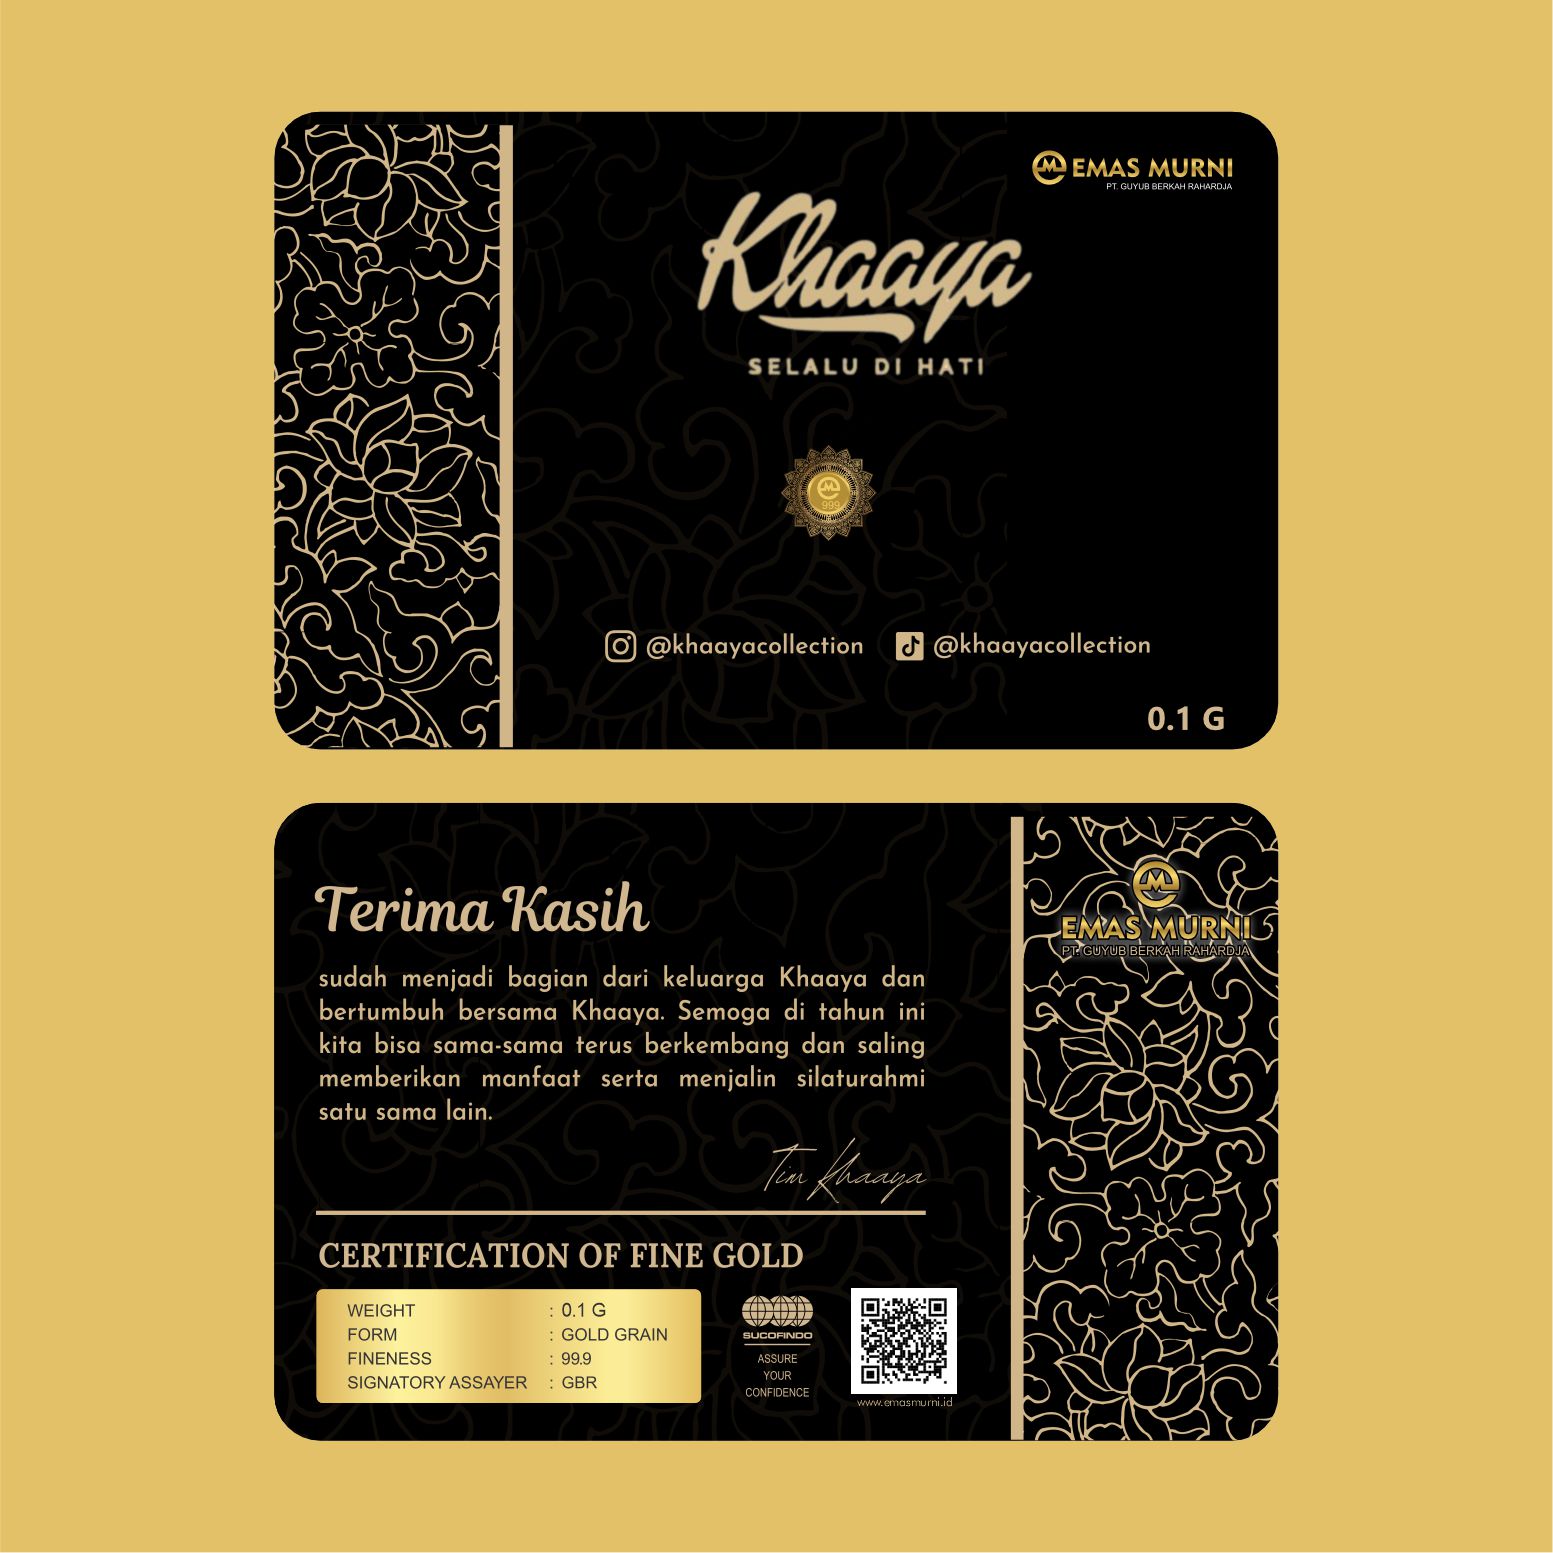 Khaaya Collection 0.1 G